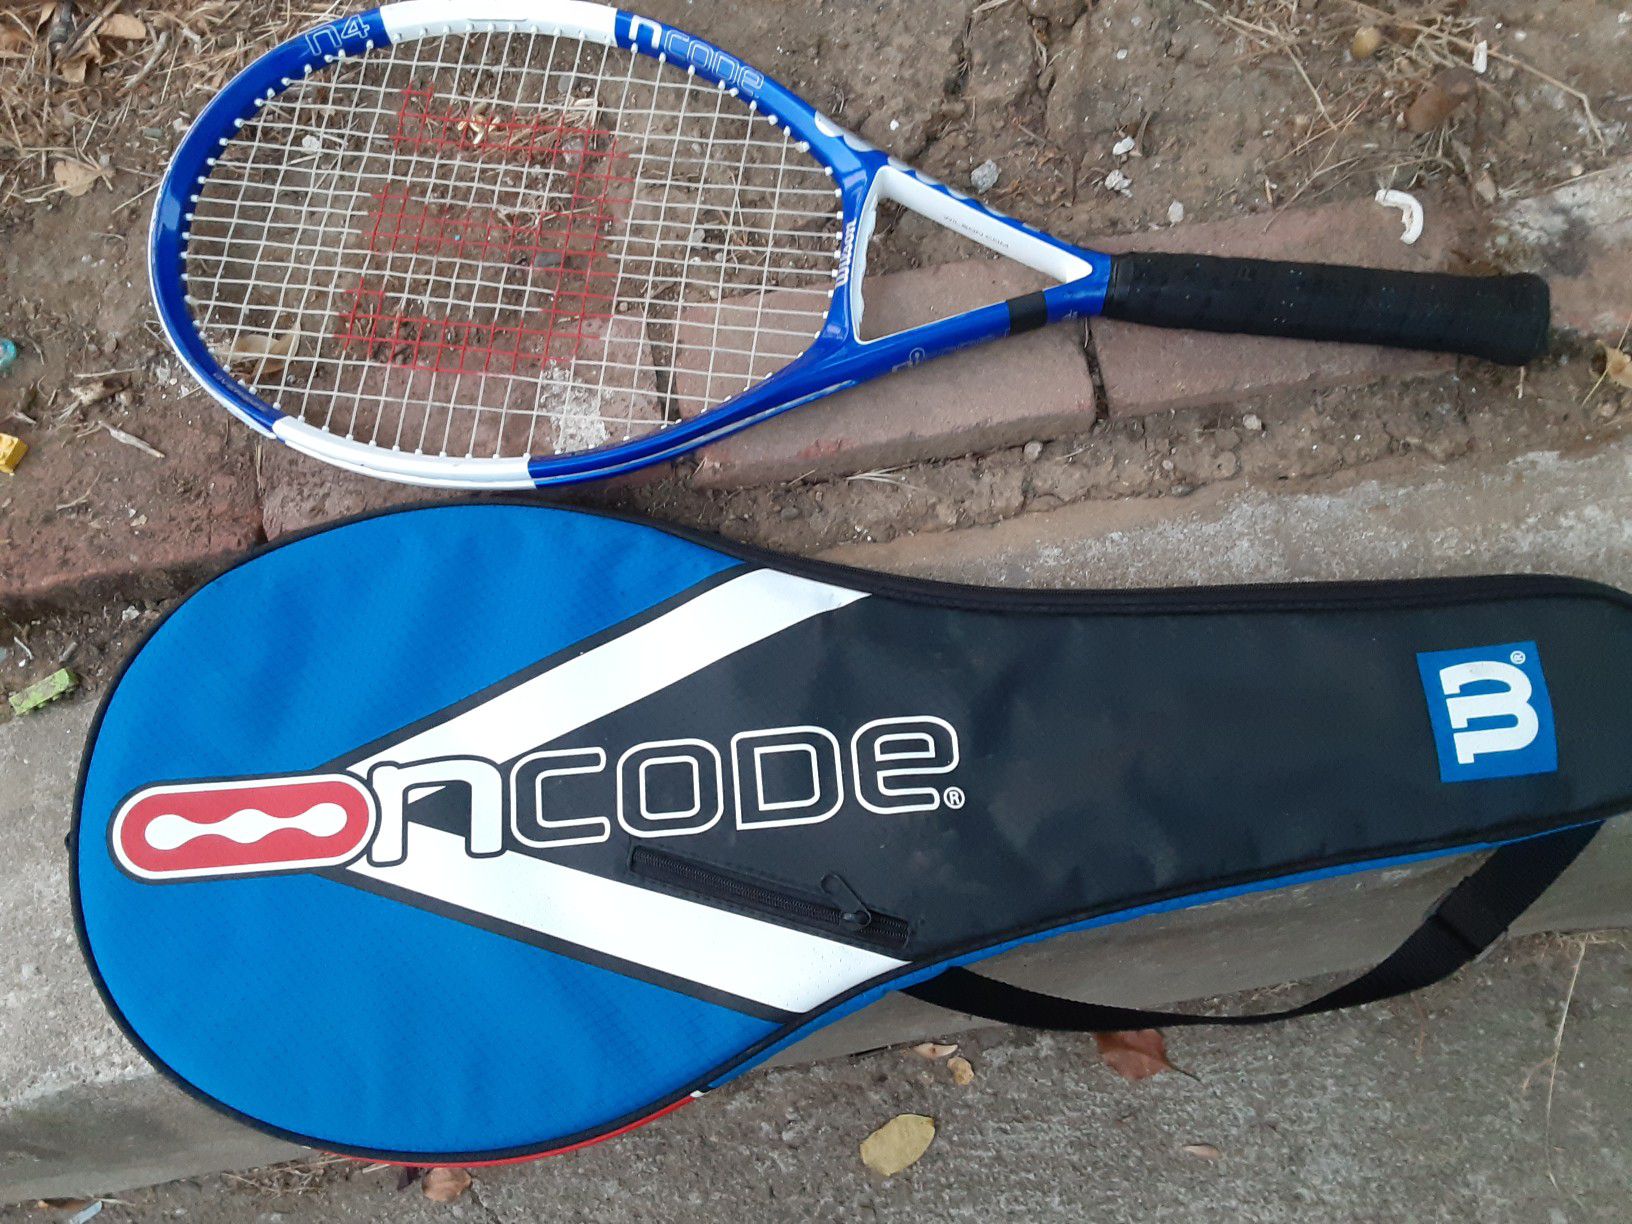 Wilson ncode tennis racquet and case